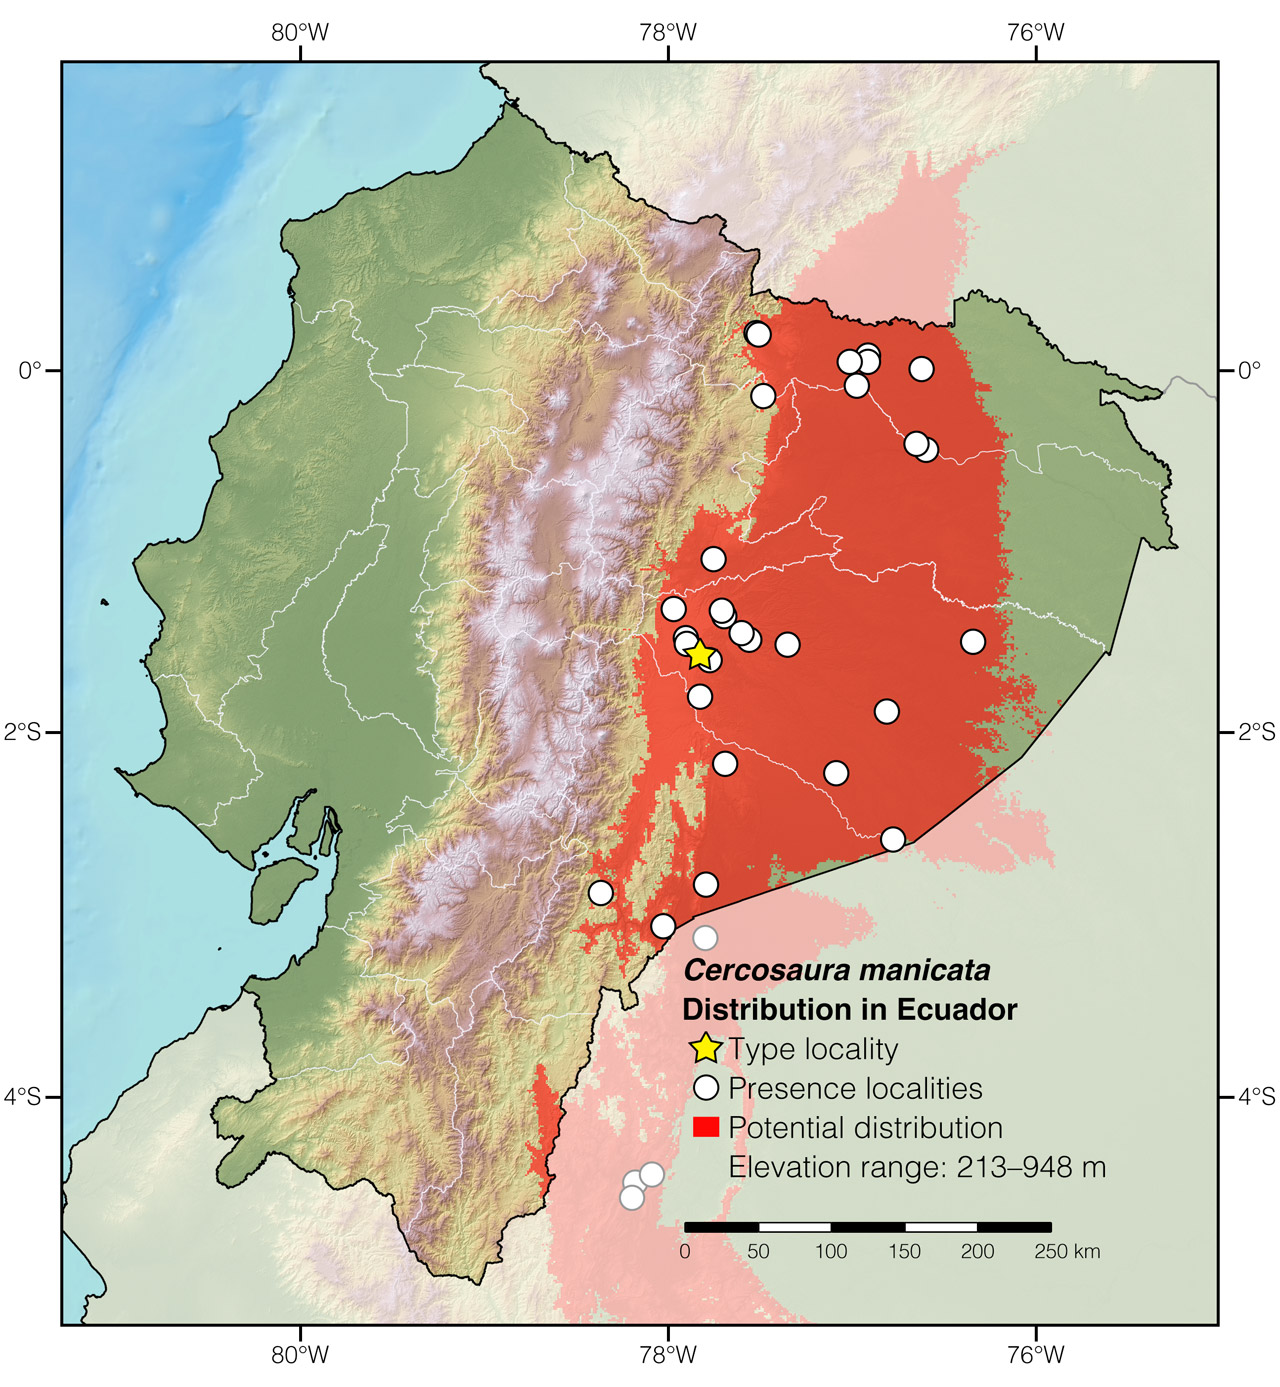 Distribution of Cercosaura manicata in Ecuador